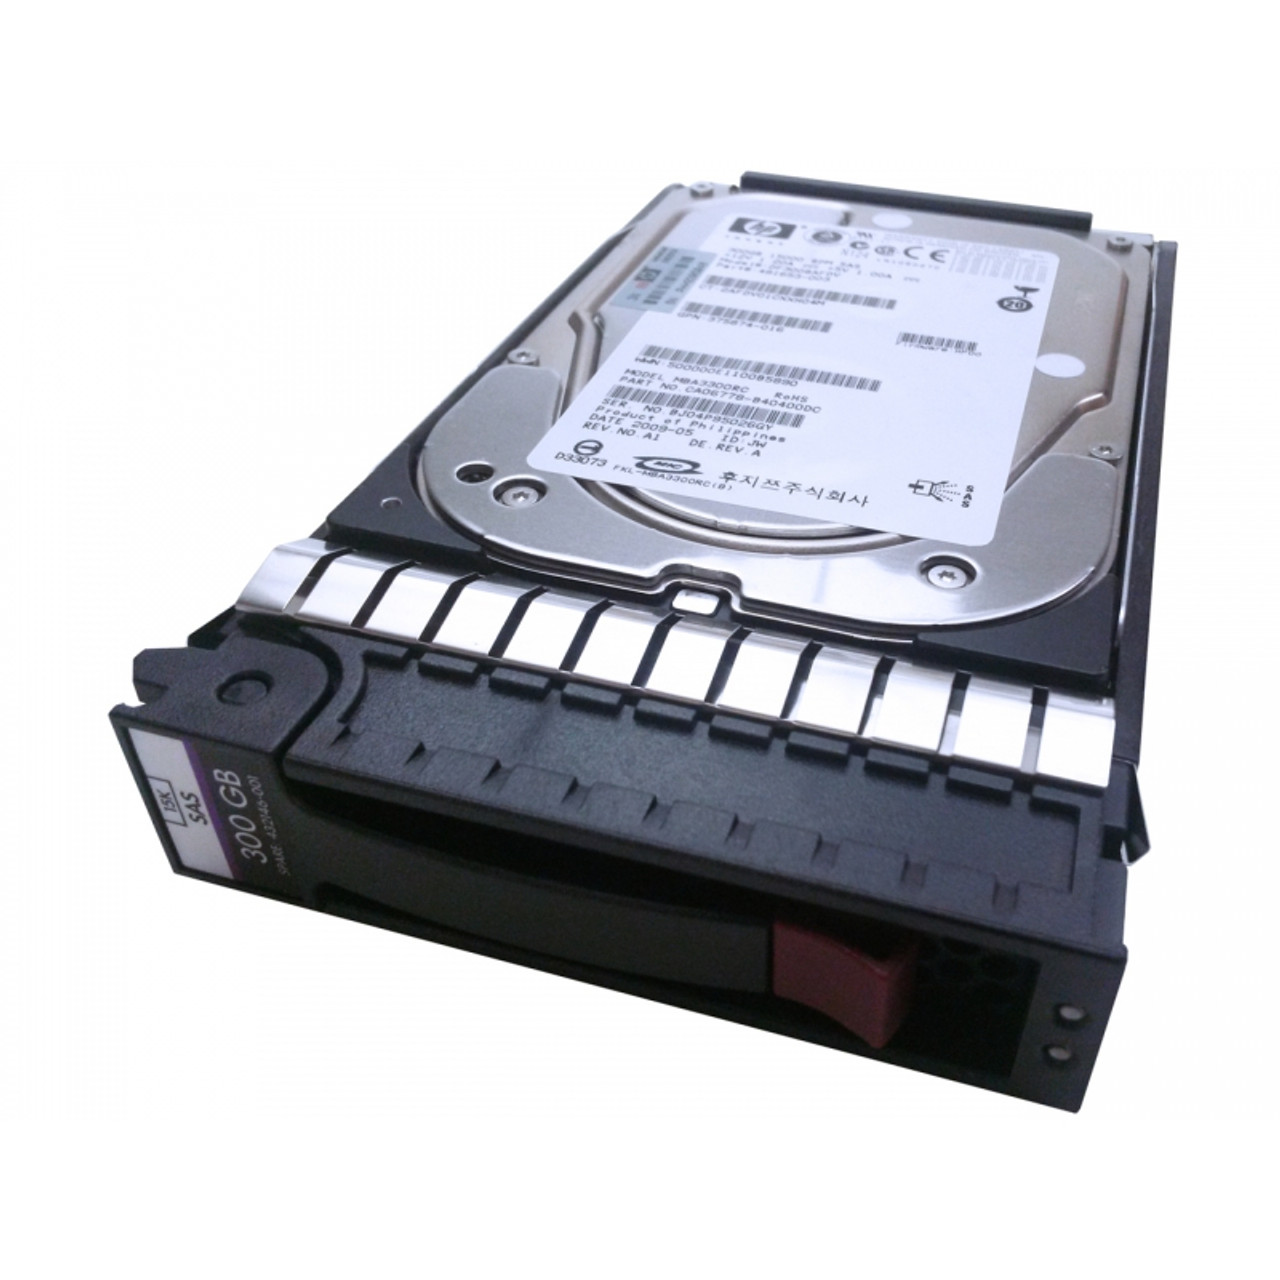 HPE SATA 3.5 LFF Hot Plug Hard Drives for G5/G6/G7 servers